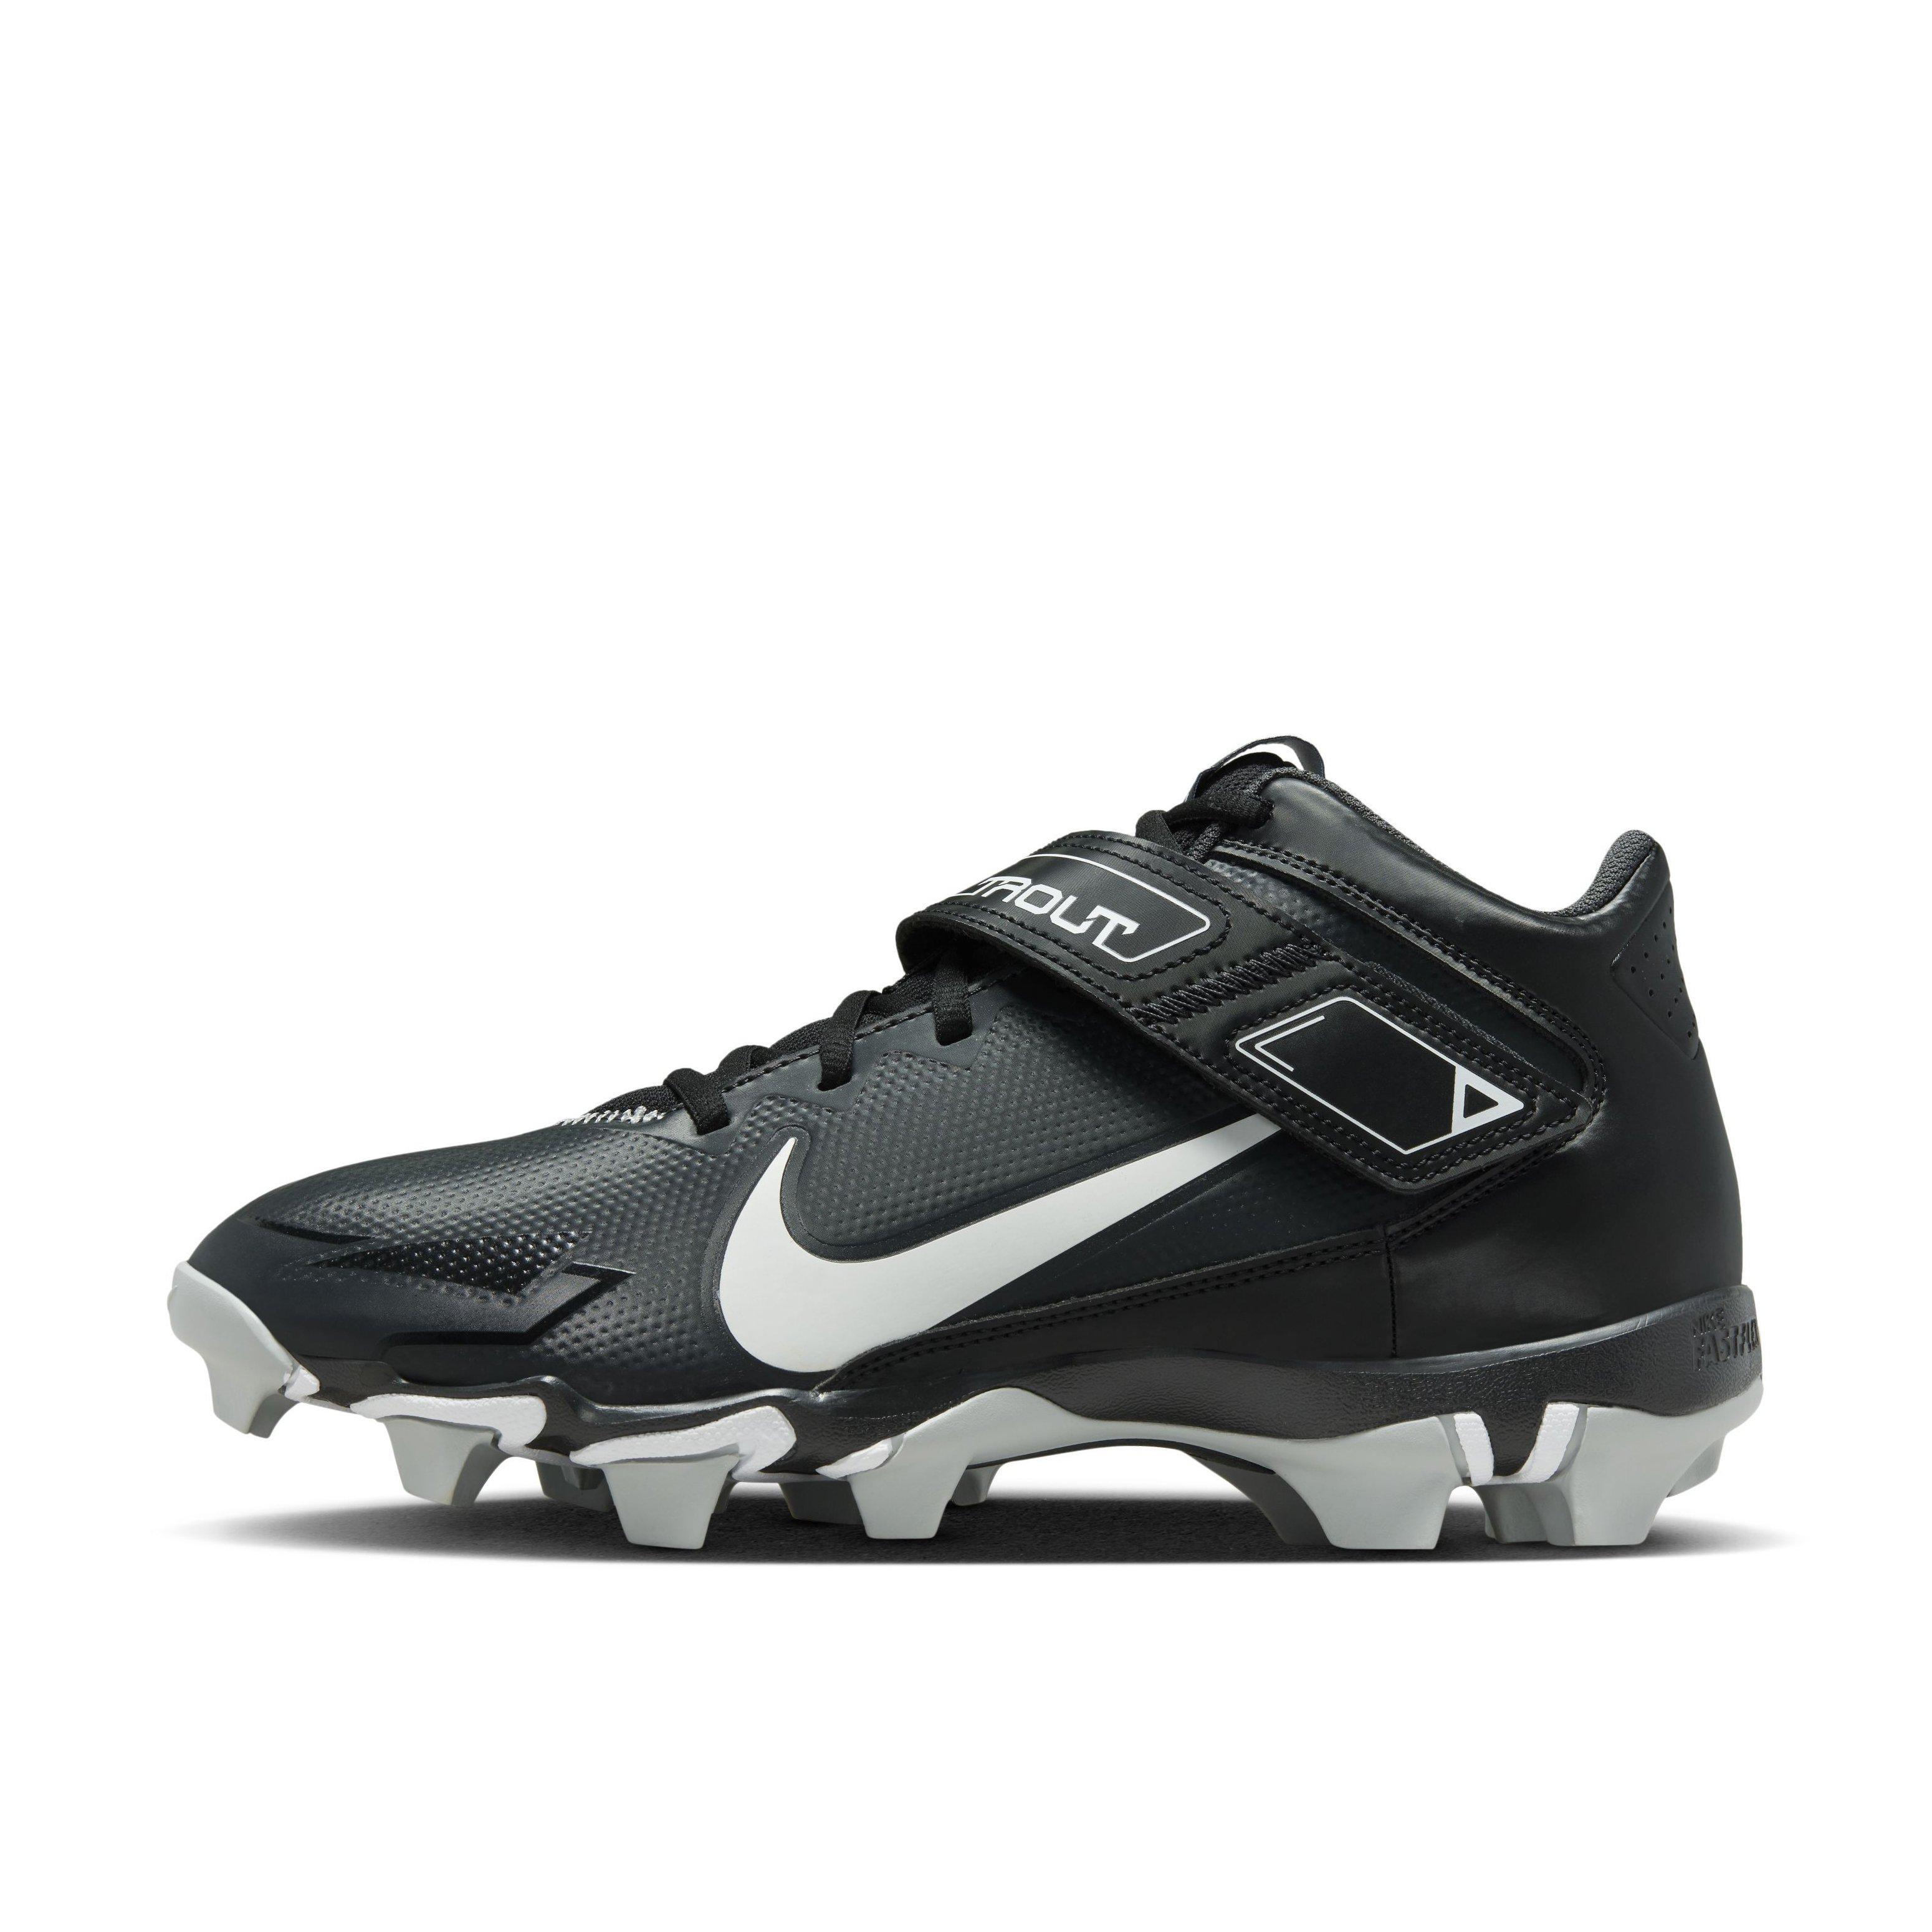 Nike Force Trout 8 Keystone "Black/White/Dark Smoke Grey/Light Grey" Men's Baseball Cleat